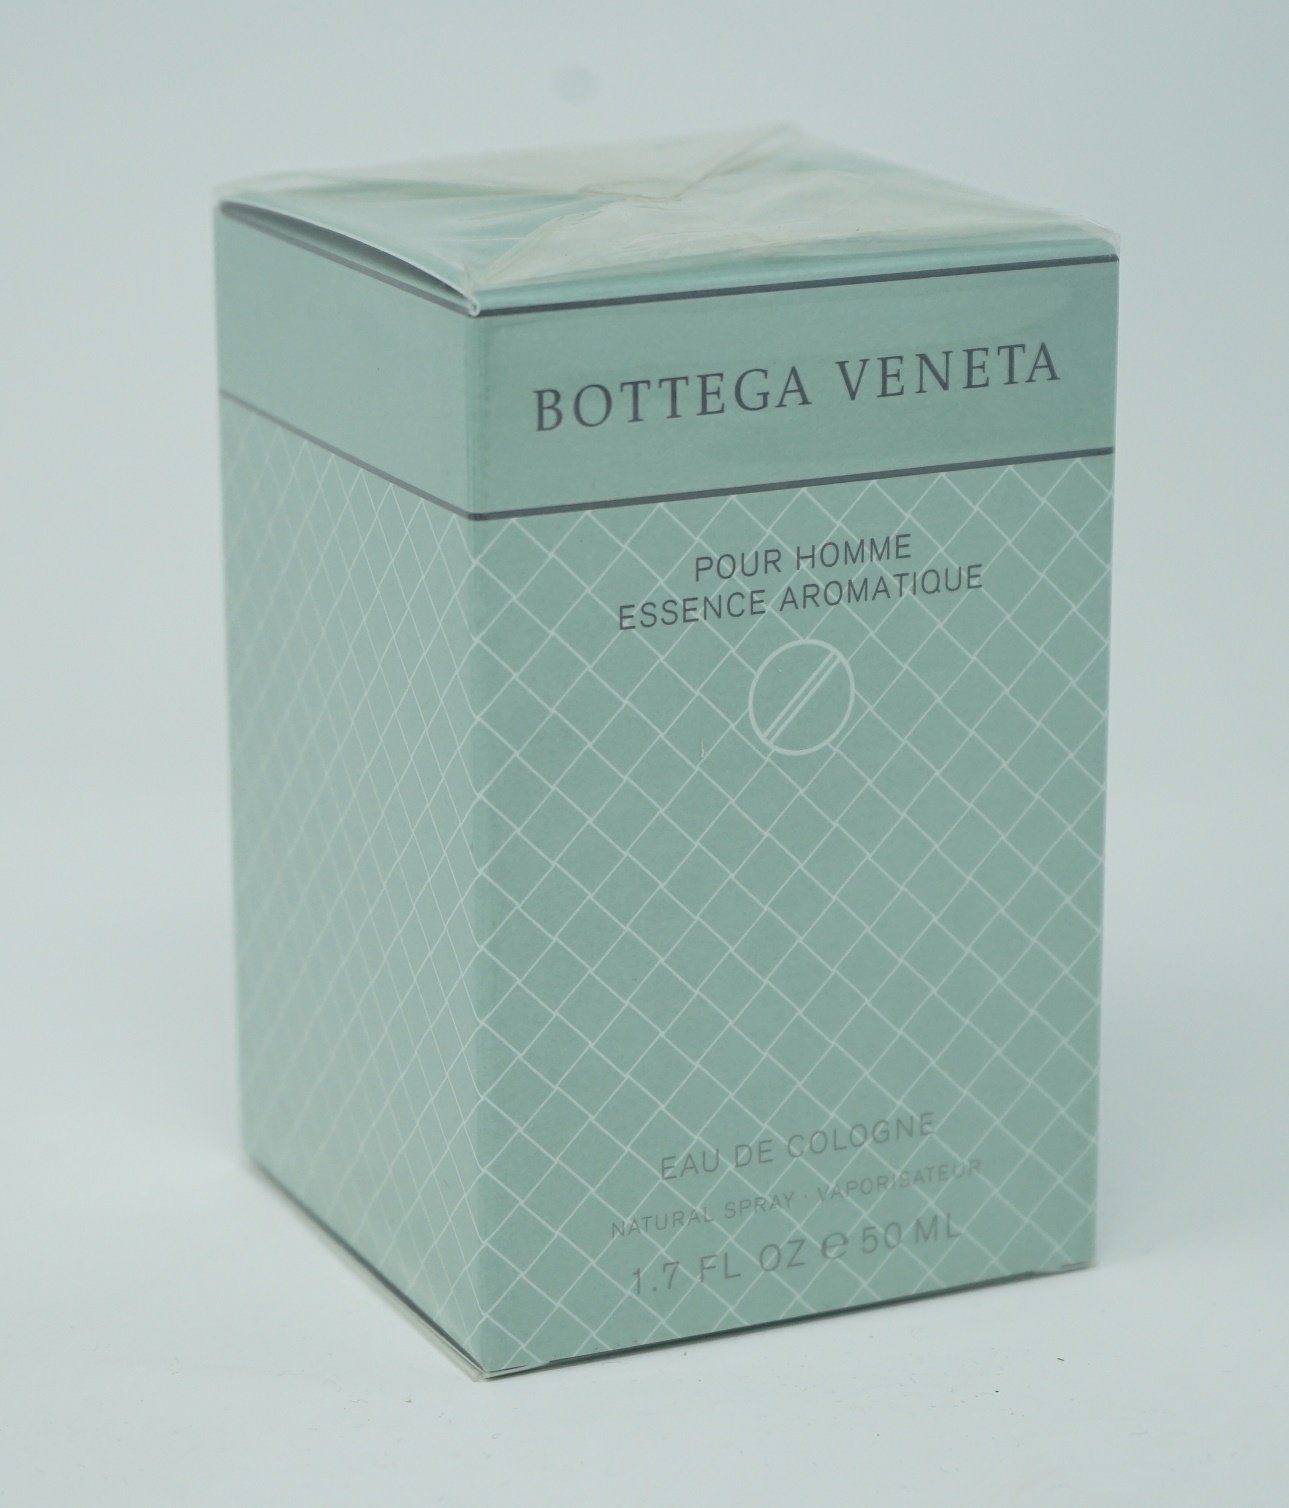 BOTTEGA VENETA Одеколон Bottega Veneta Pour HOmme Essence Aromatique Одеколон 50ml